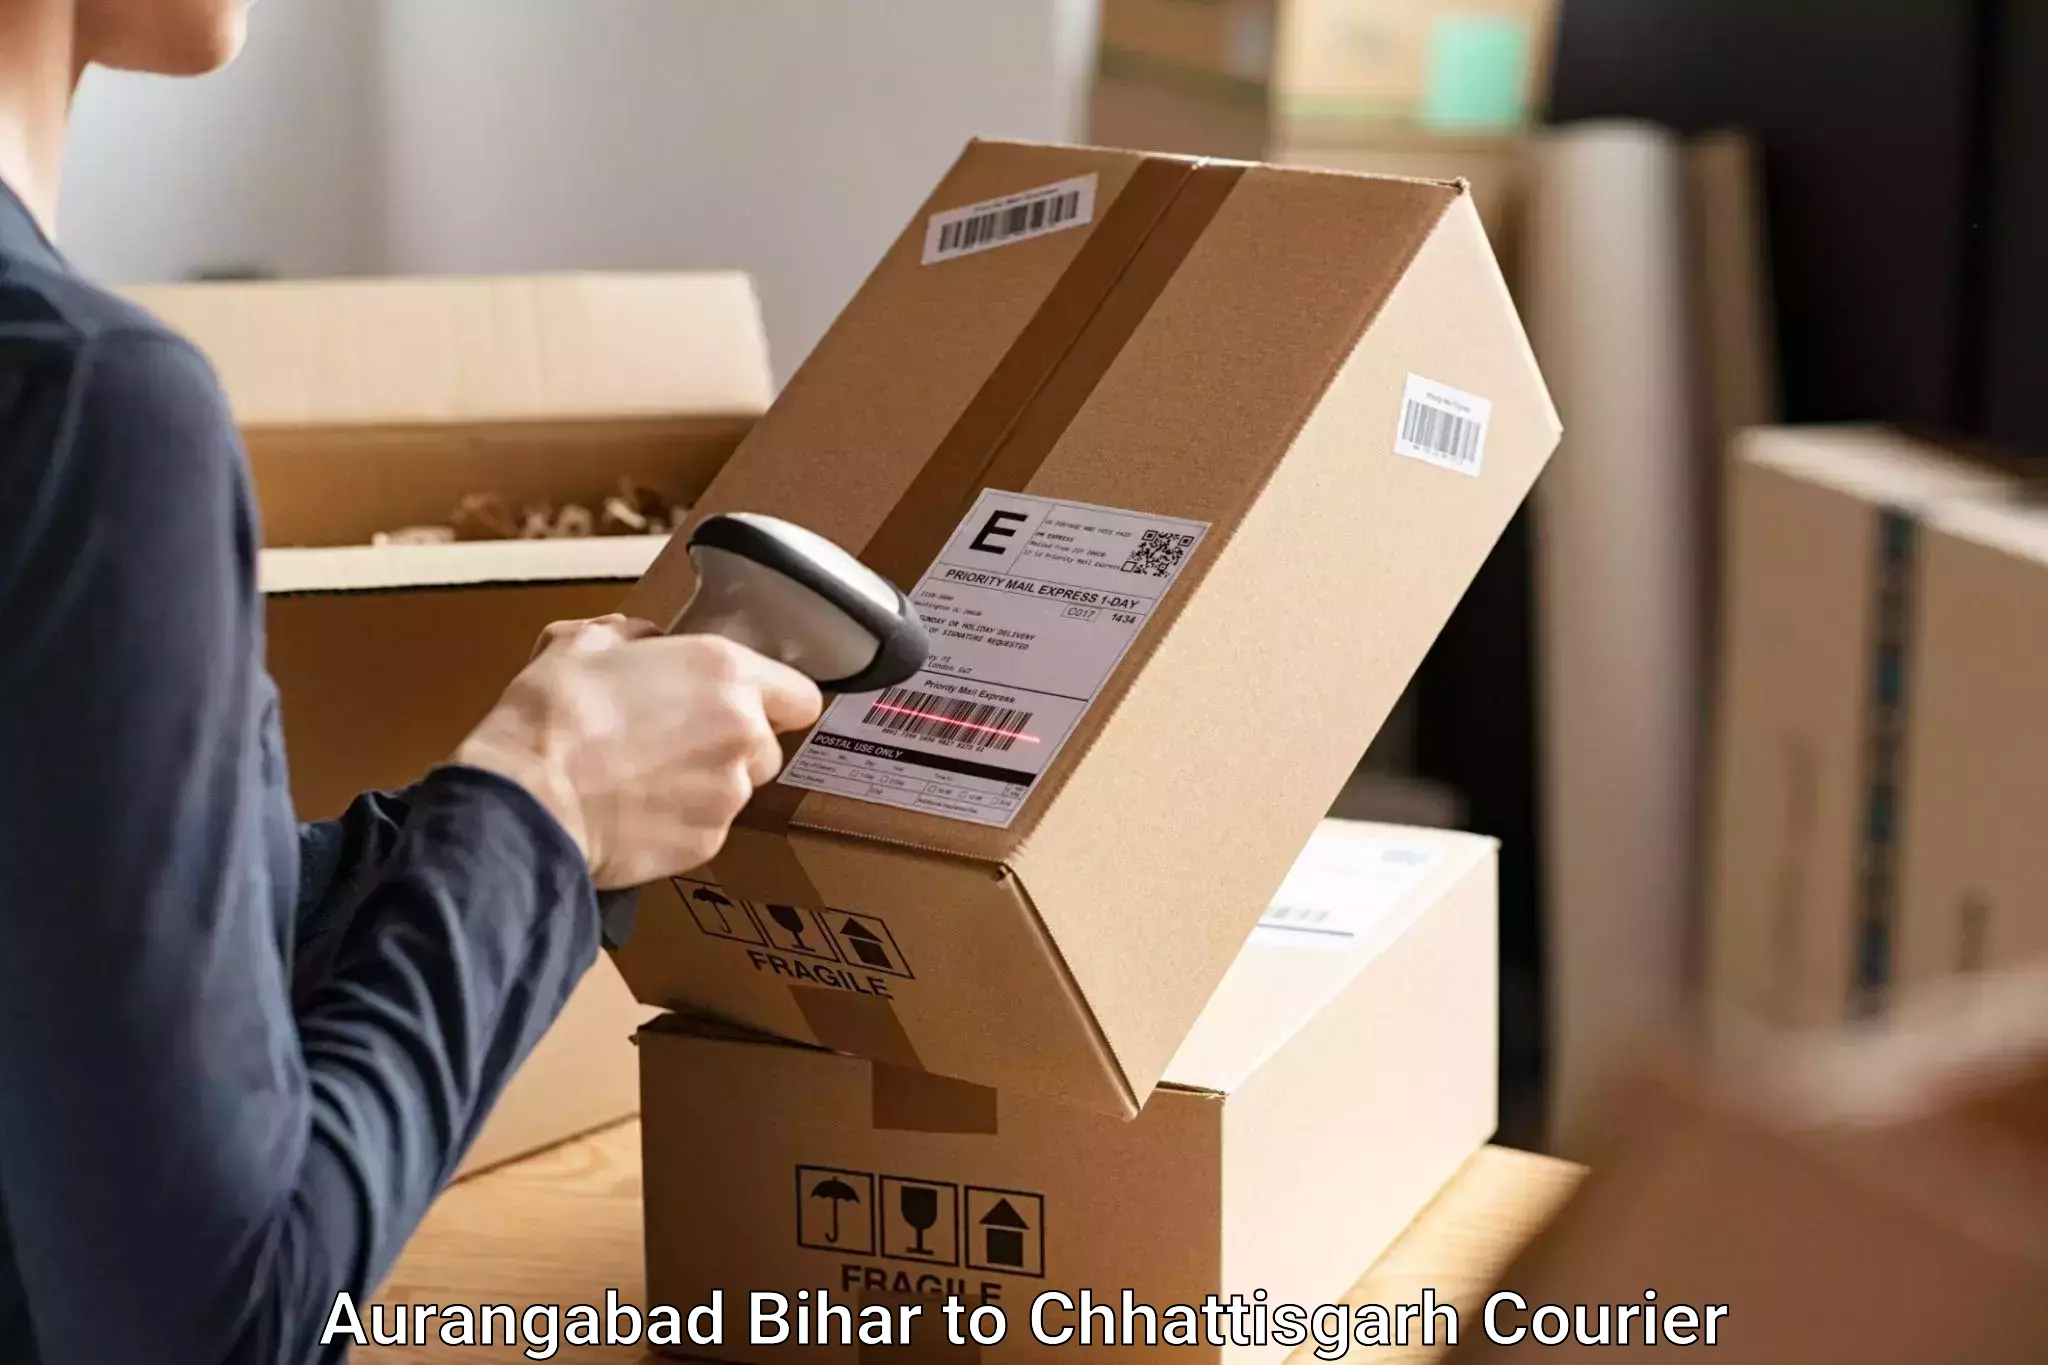 Luggage transport consultancy Aurangabad Bihar to Khairagarh